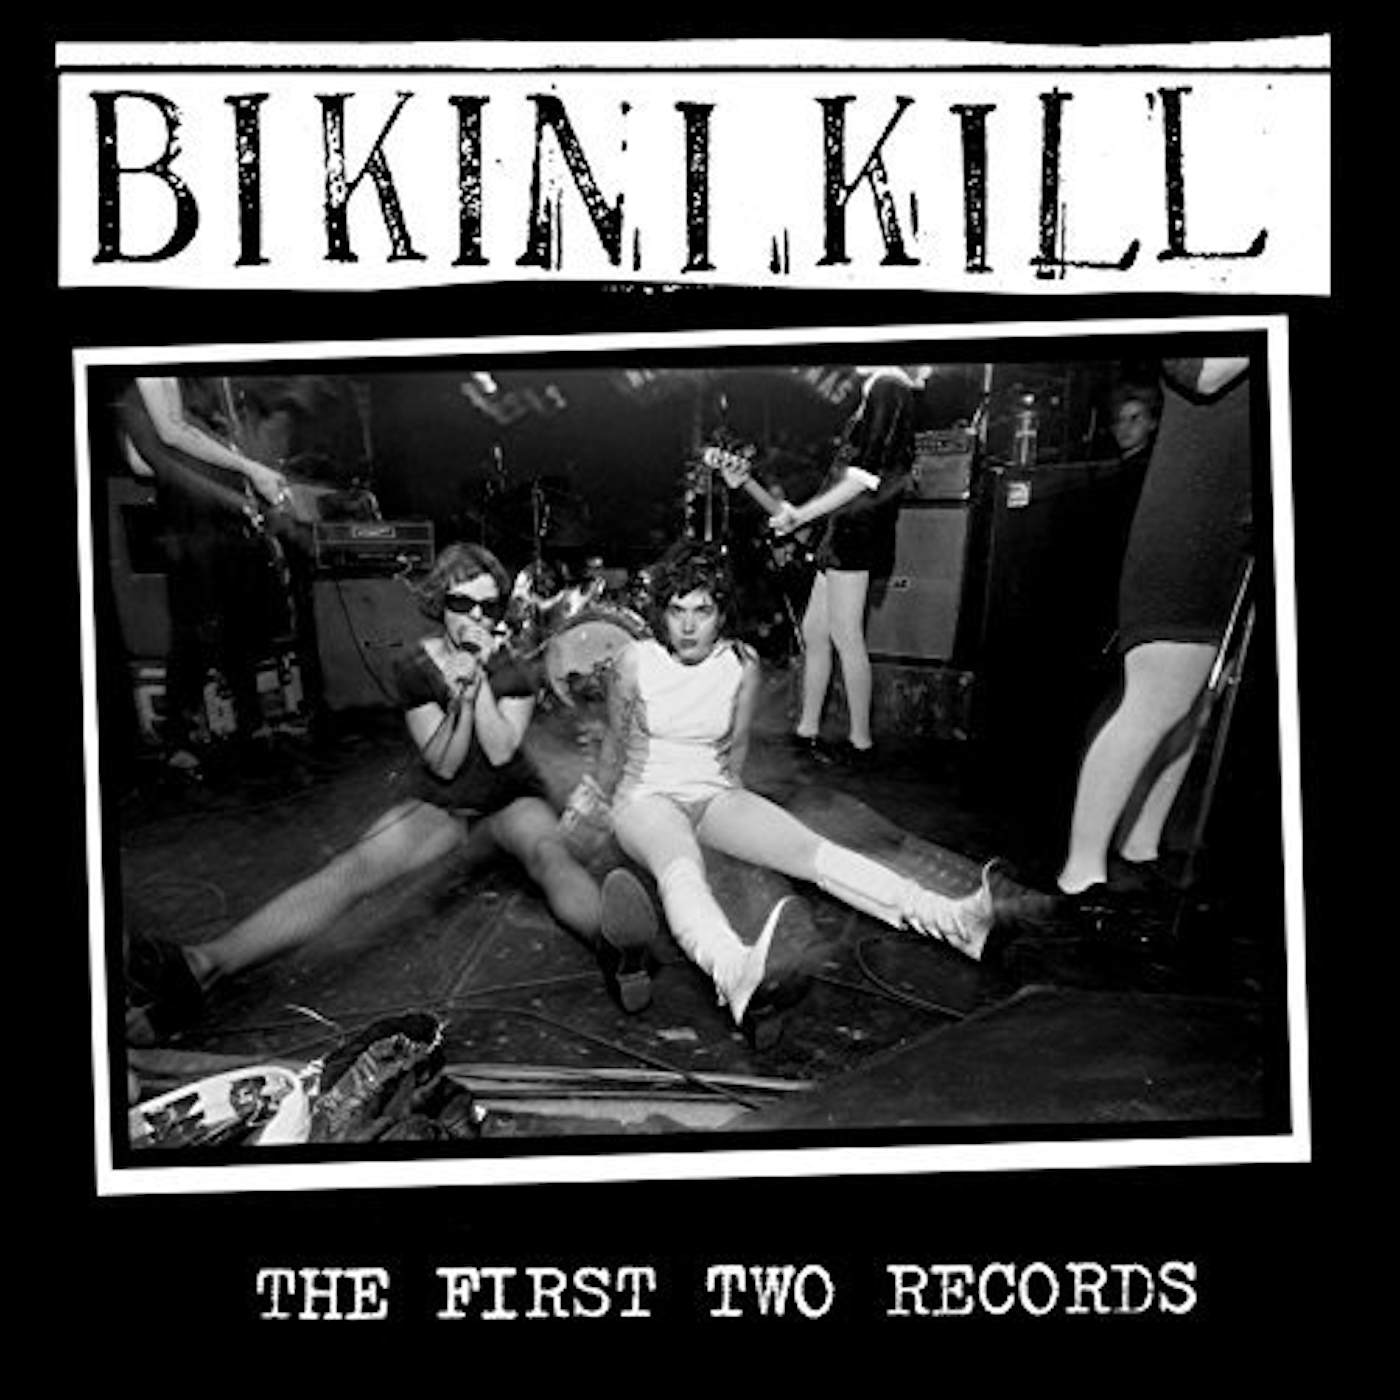 Bikini Kill FIRST TWO RECORDS CD